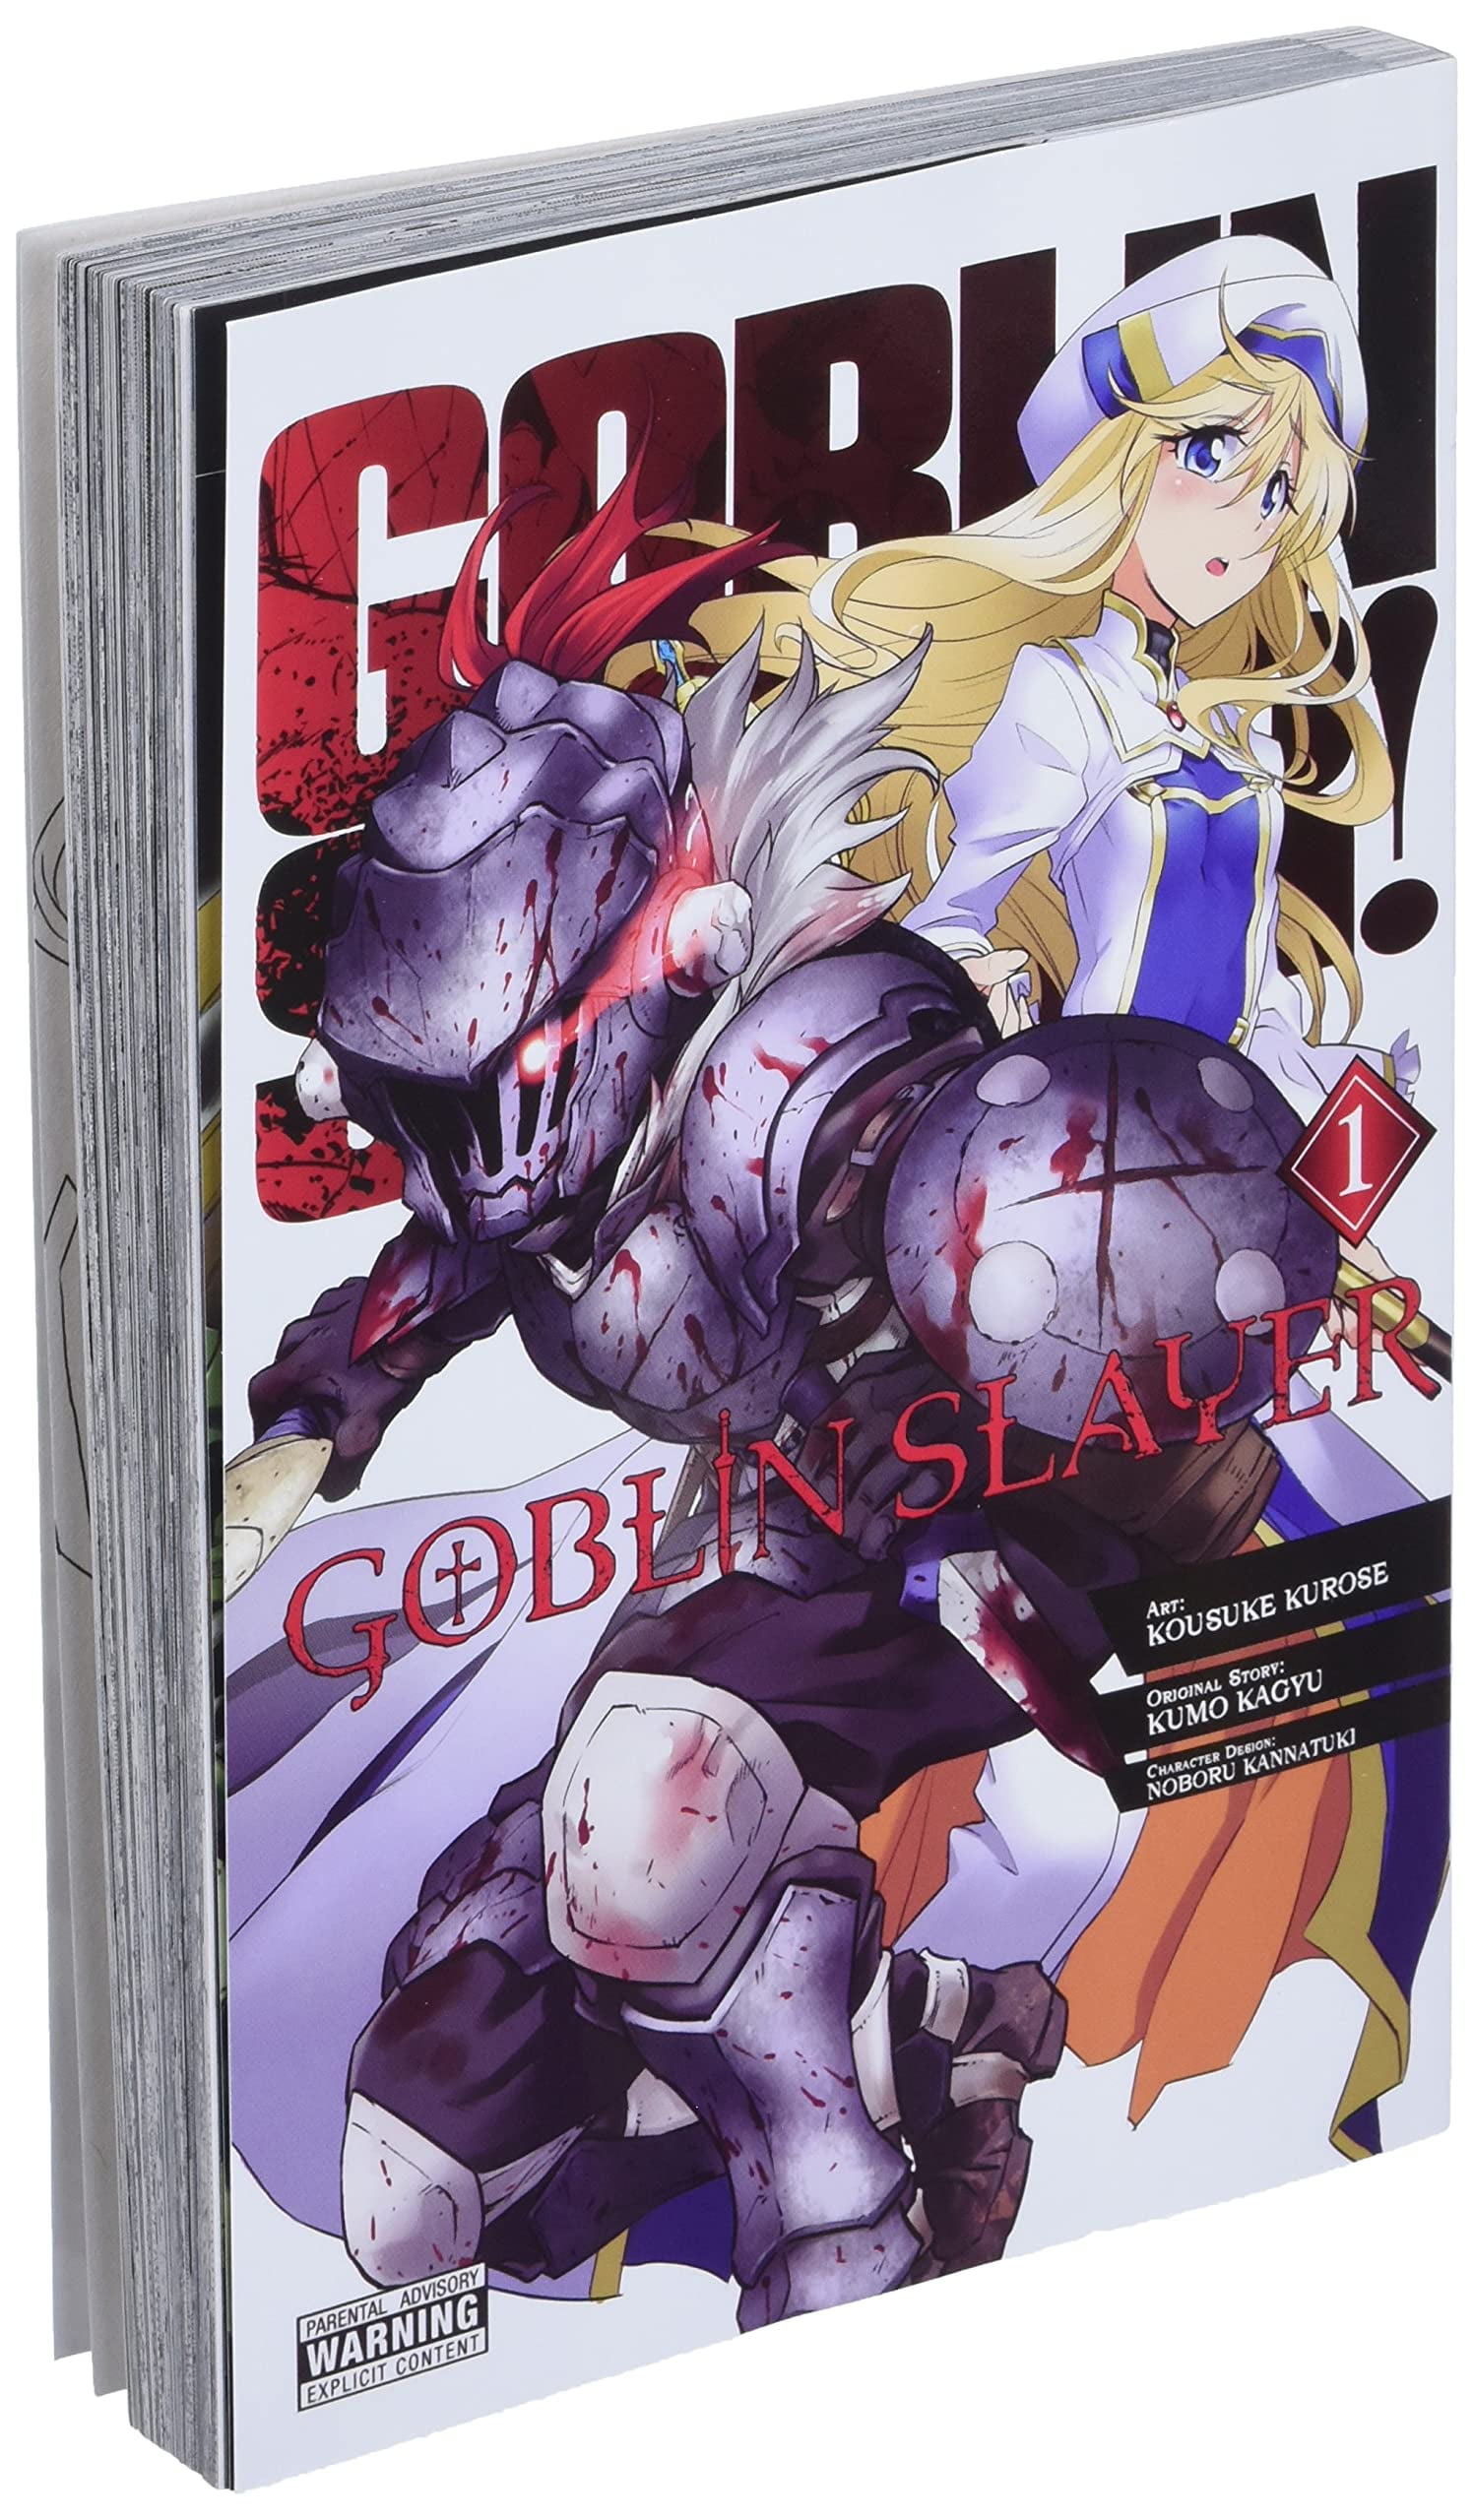 Books Kinokuniya: Goblin Slayer, Vol. 5 (manga) / Kagyu, Kumo/ Kannatuki,  Noboru/ Kurose, Kousuke (9781975330323)